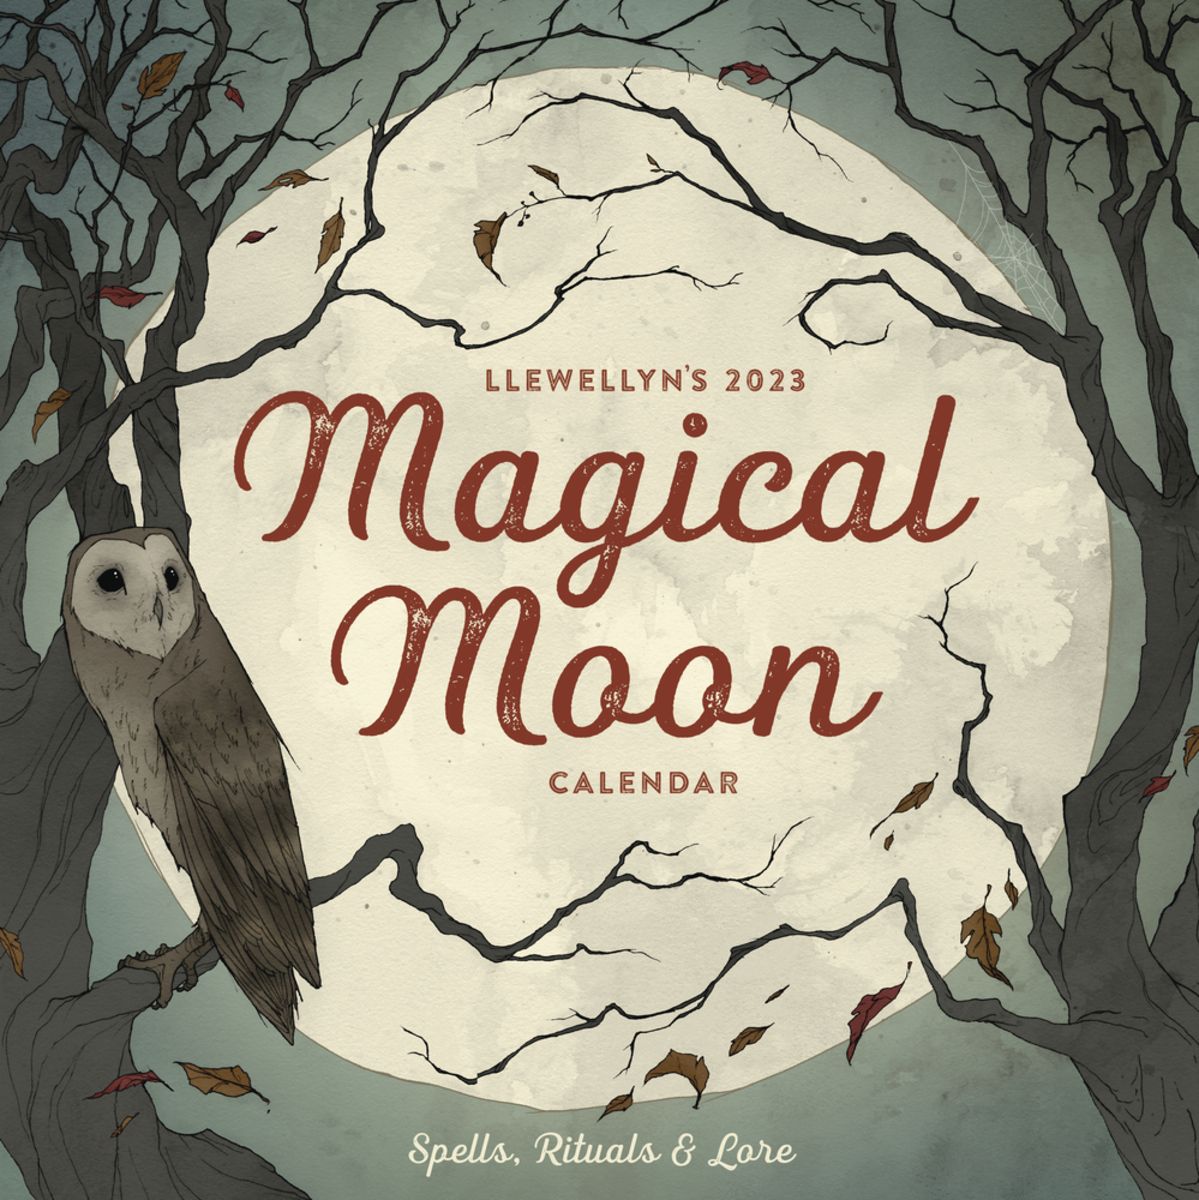 Llewellyn's 2023 Magical Moon Calendar Spells, Rituals & Lore